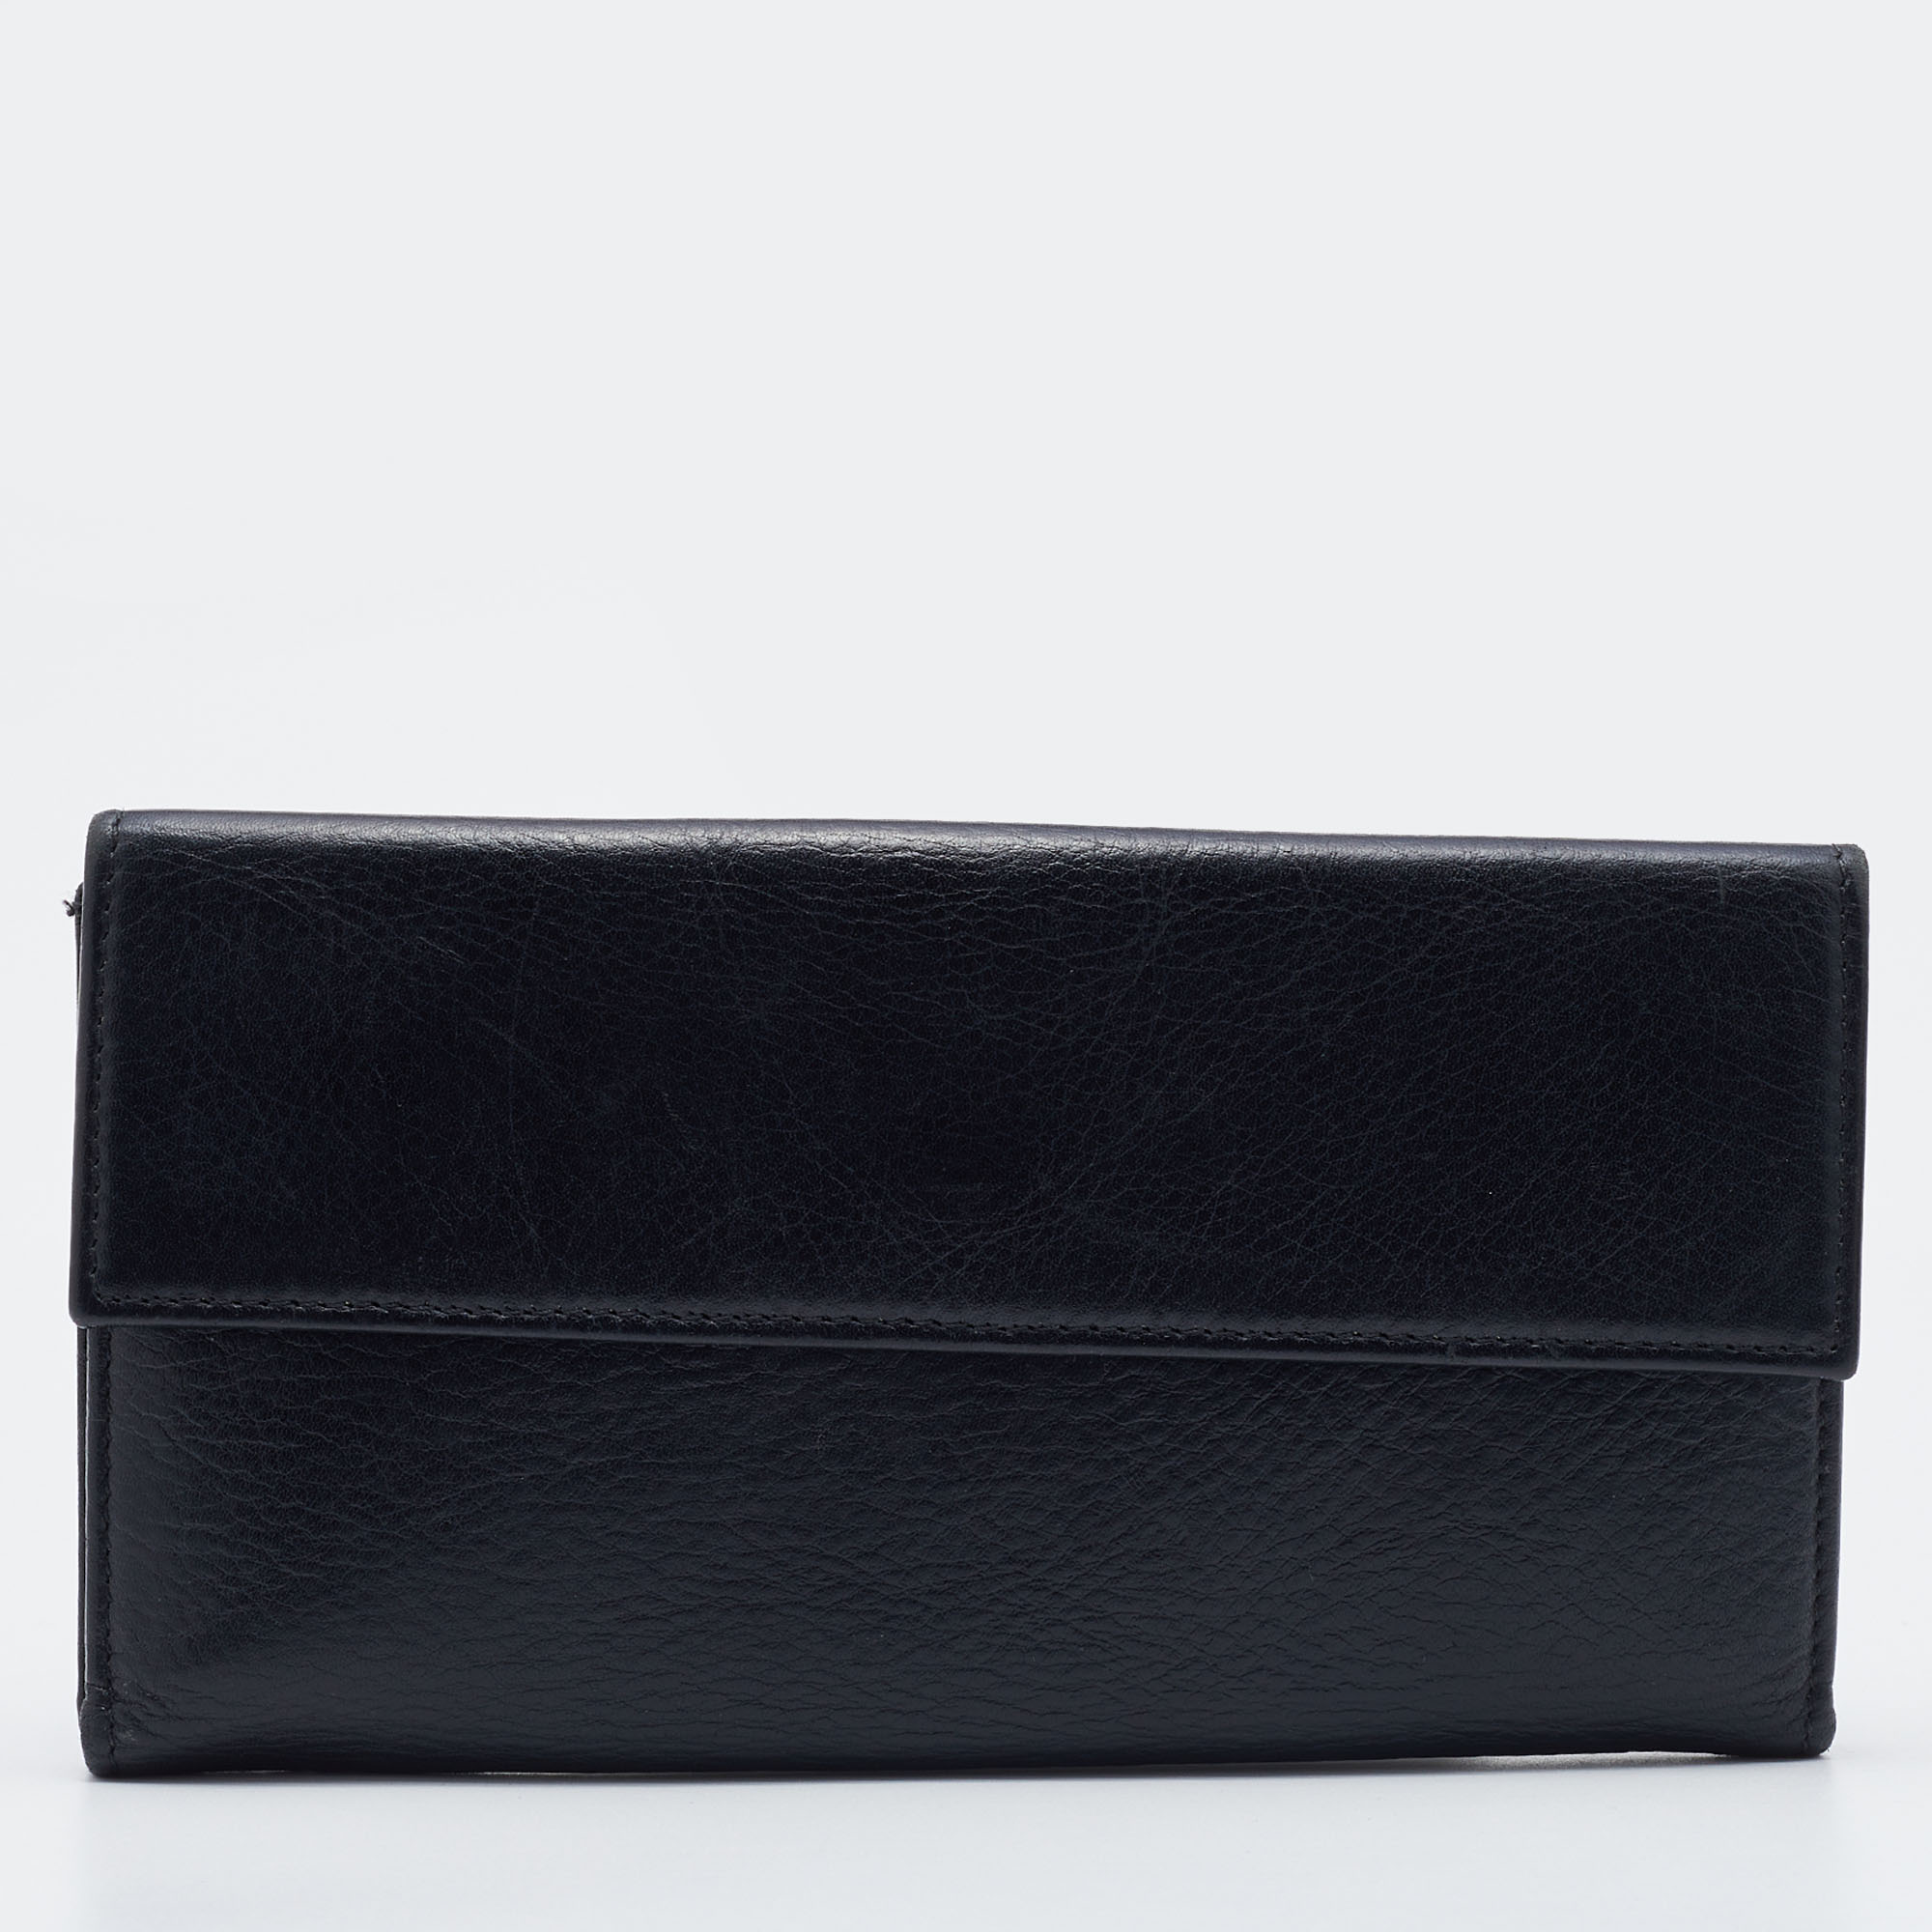 Fendi Black Leather Flap Continental Wallet